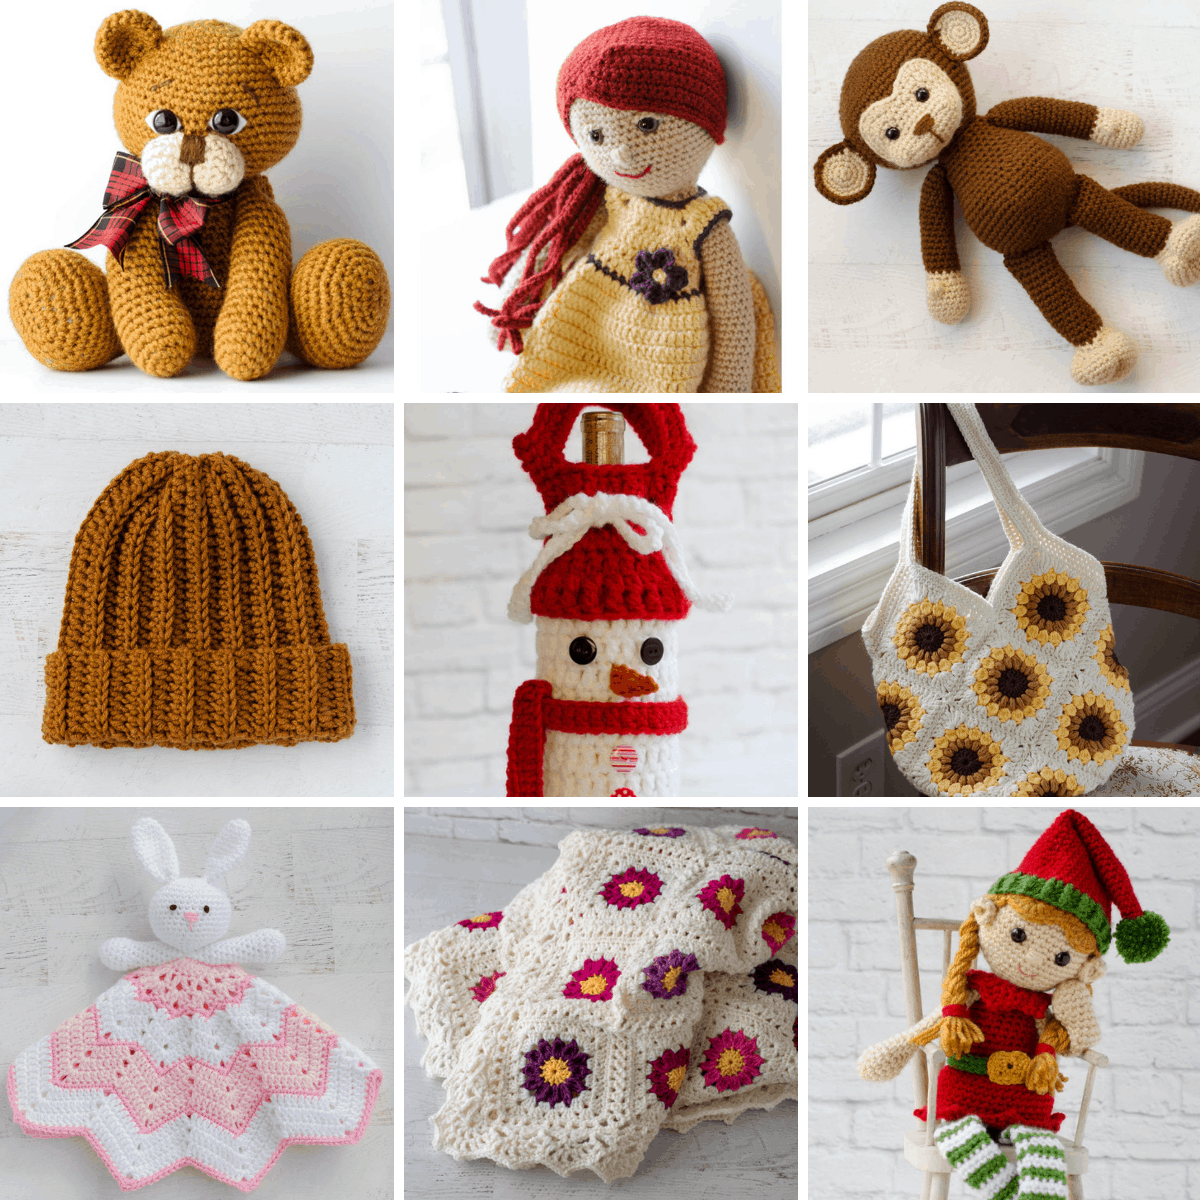 Collage of 9 crochet items: a brown crochet bear, a doll with orange hair, a monkey, a rust color hat, a snowman wine cozy, a daisy purse, a bunny lovey, a flower afghan and an elf.